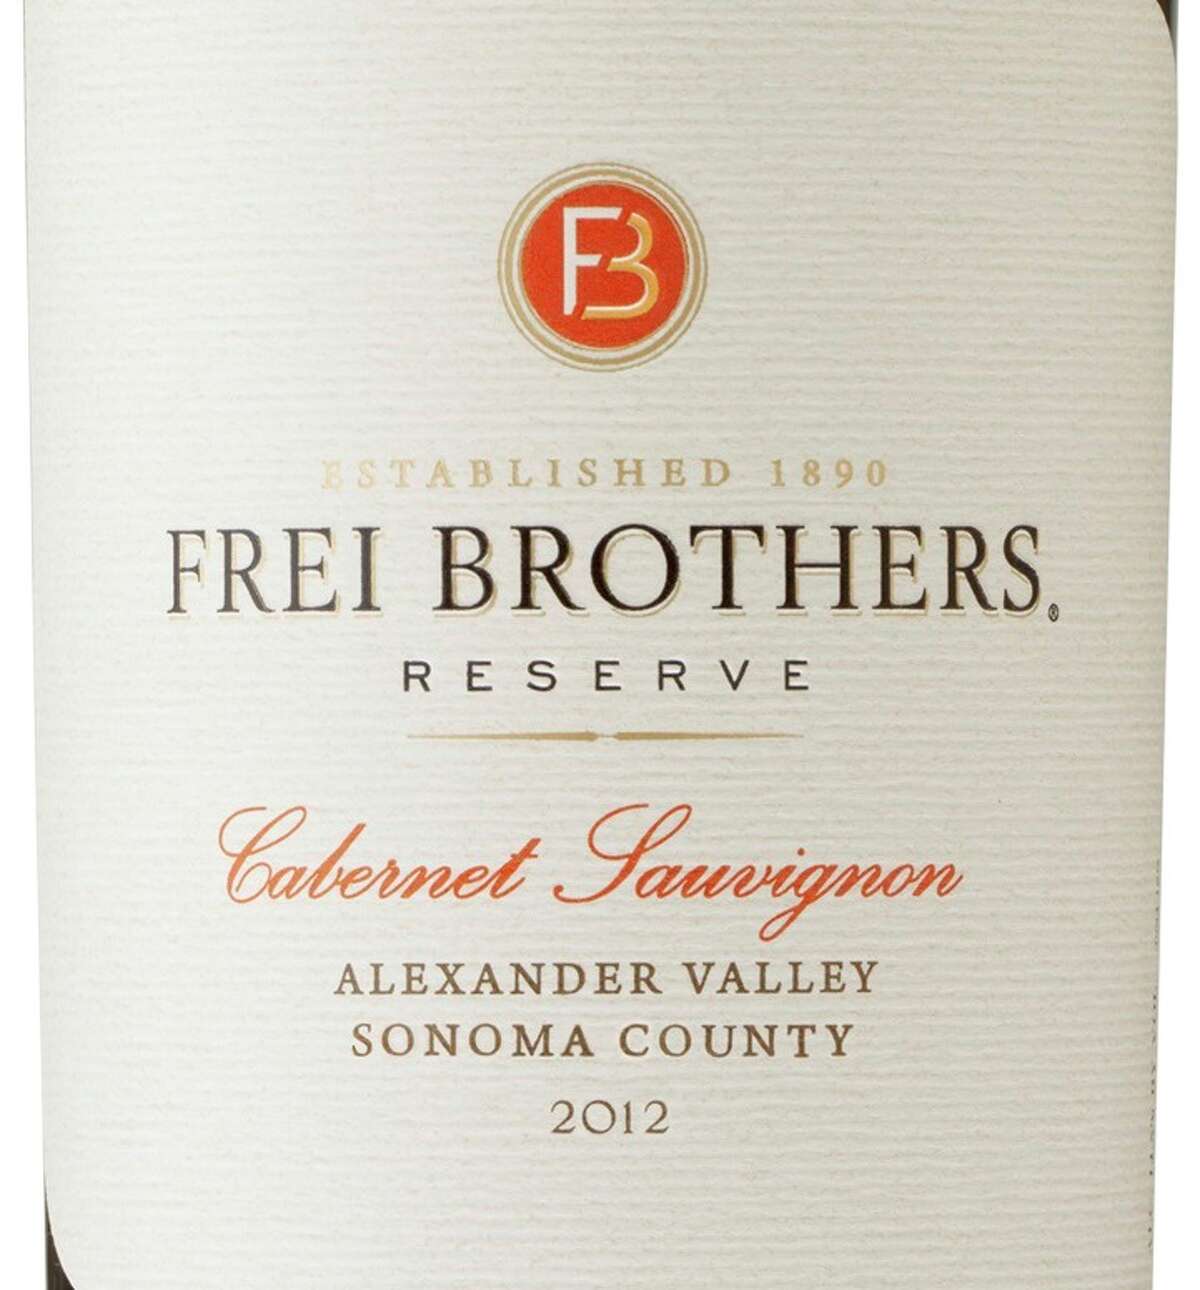 Frei Brothers Reserve Alexander Valley Sonoma County 2012 Cabernet Sauvignon